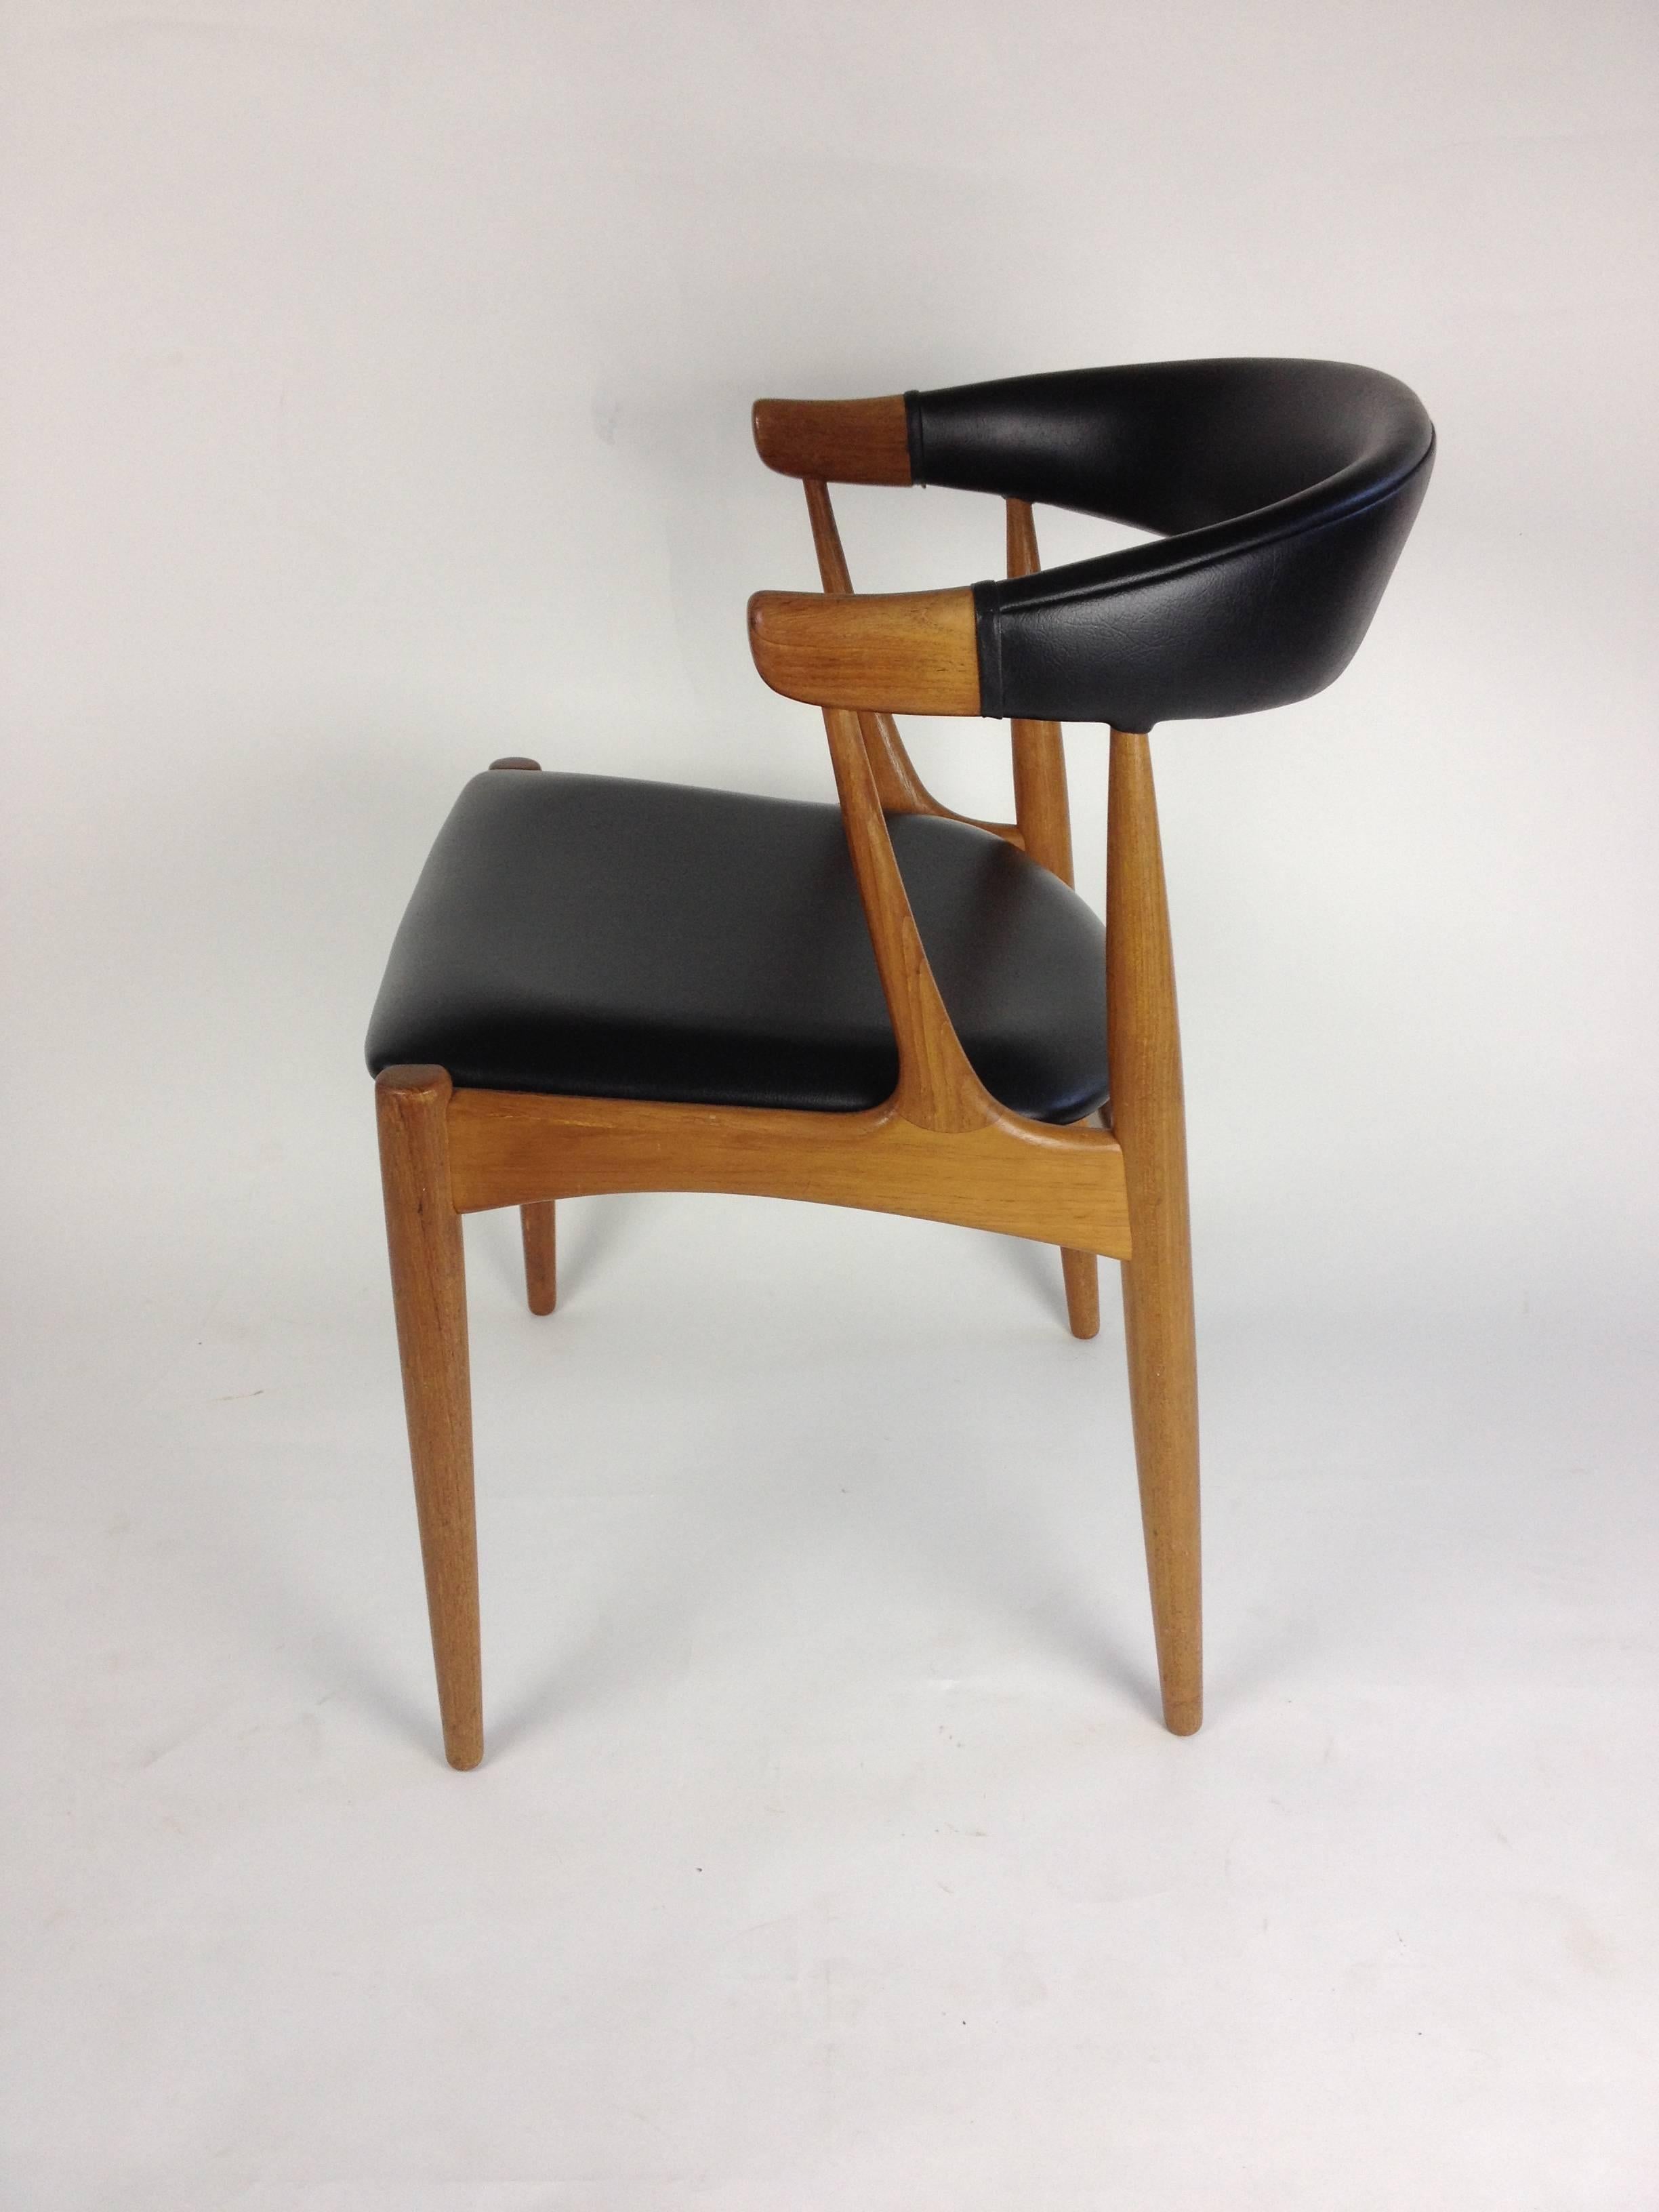 Striking Mid-Century Modern Teak Chair Designed by Johannes Andersen - Denmark For Sale 4